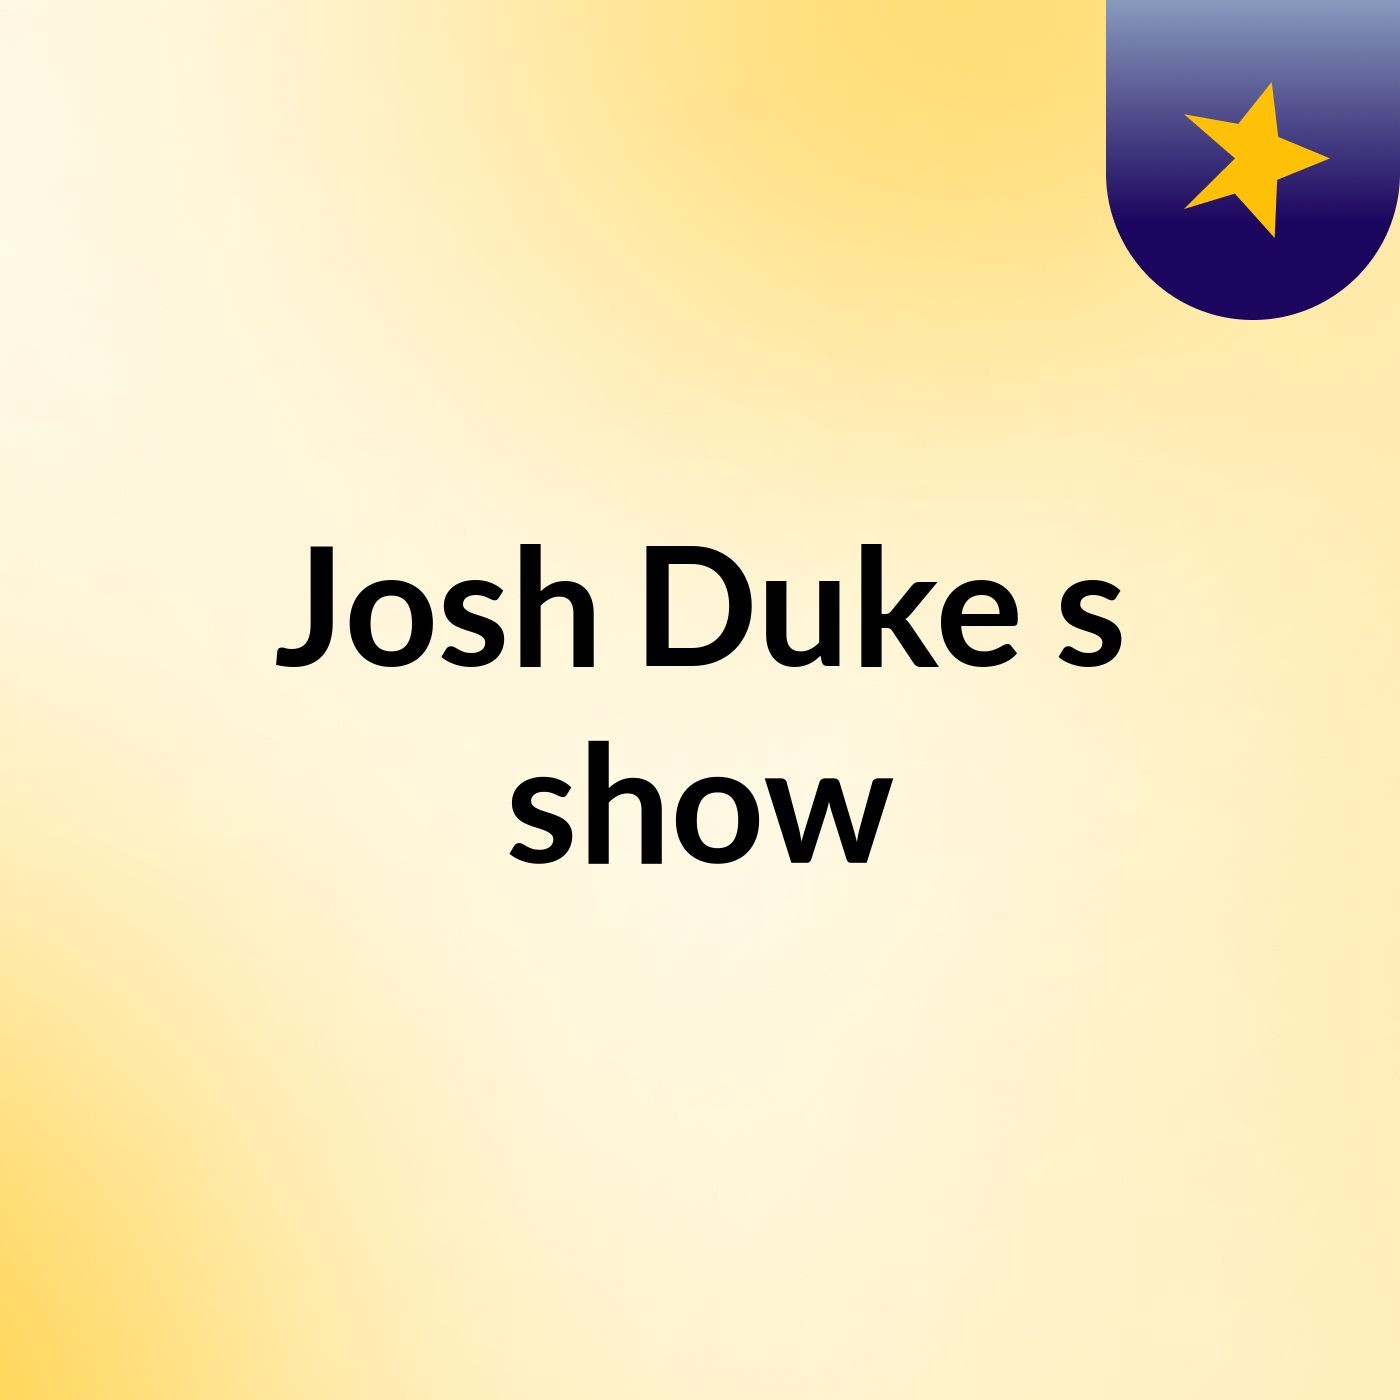 Josh Duke's show